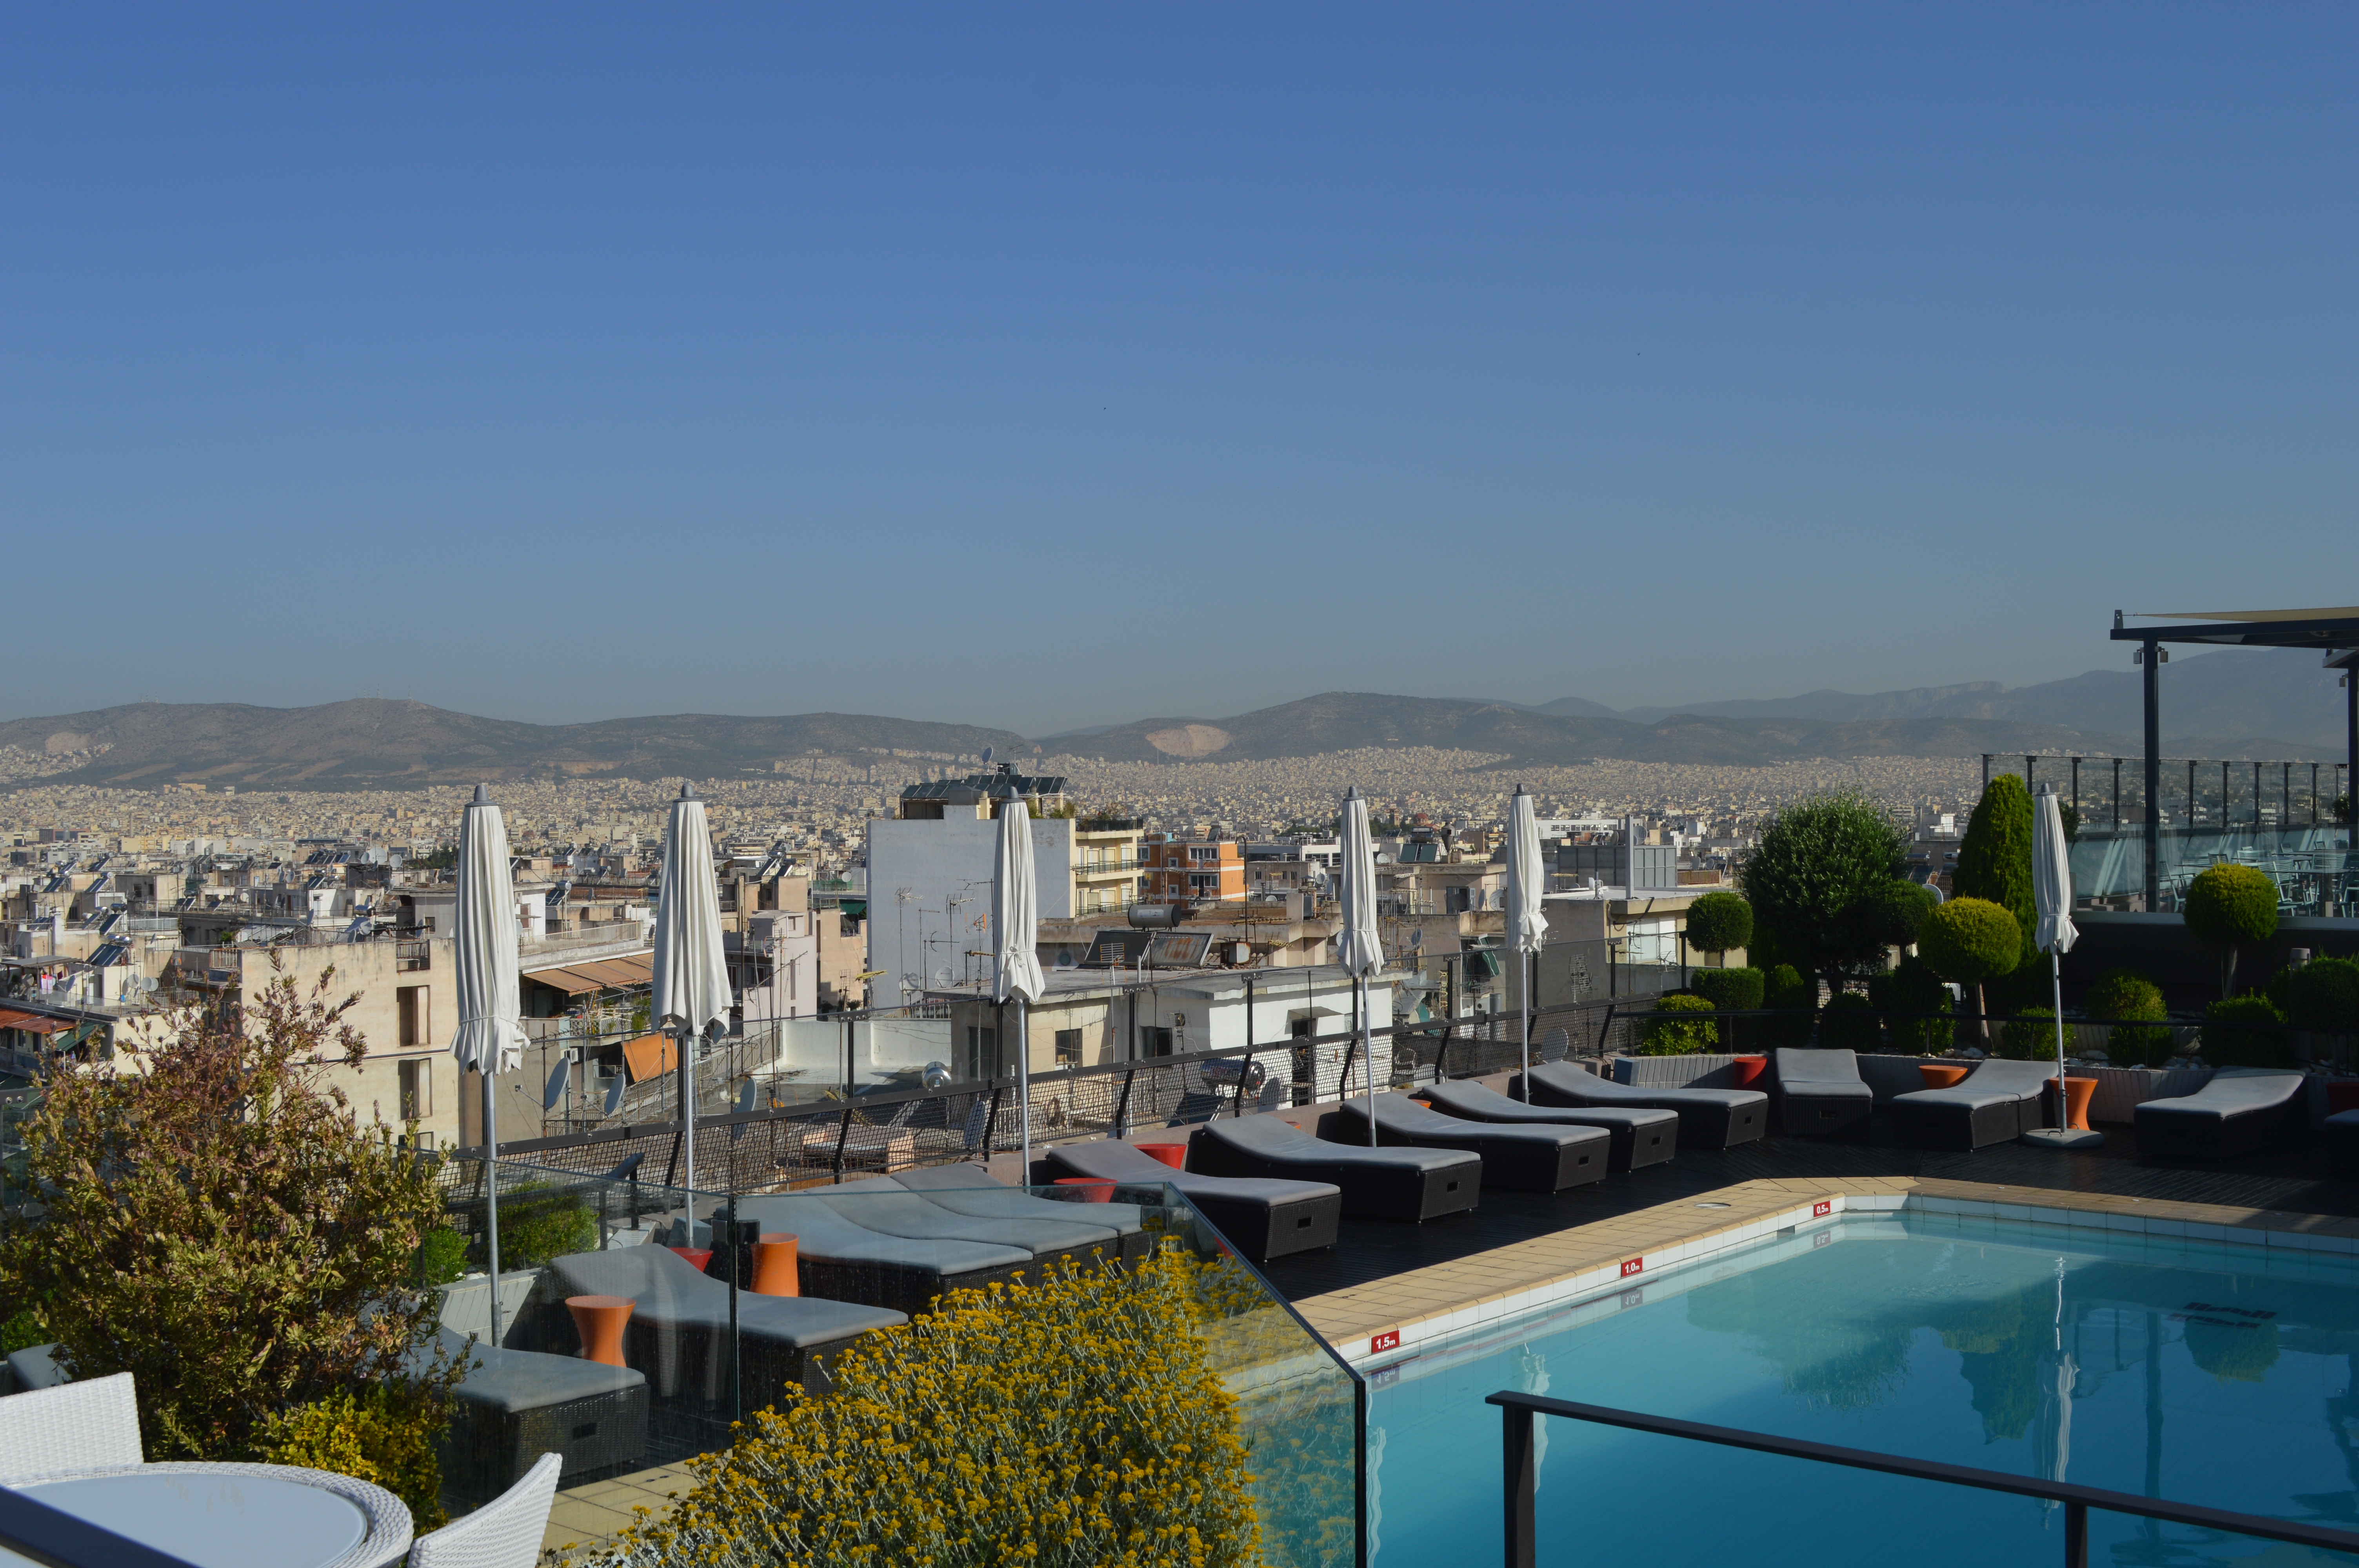 Novotel Athènes piscine rooftop - blog voyages Camille In Bordeaux